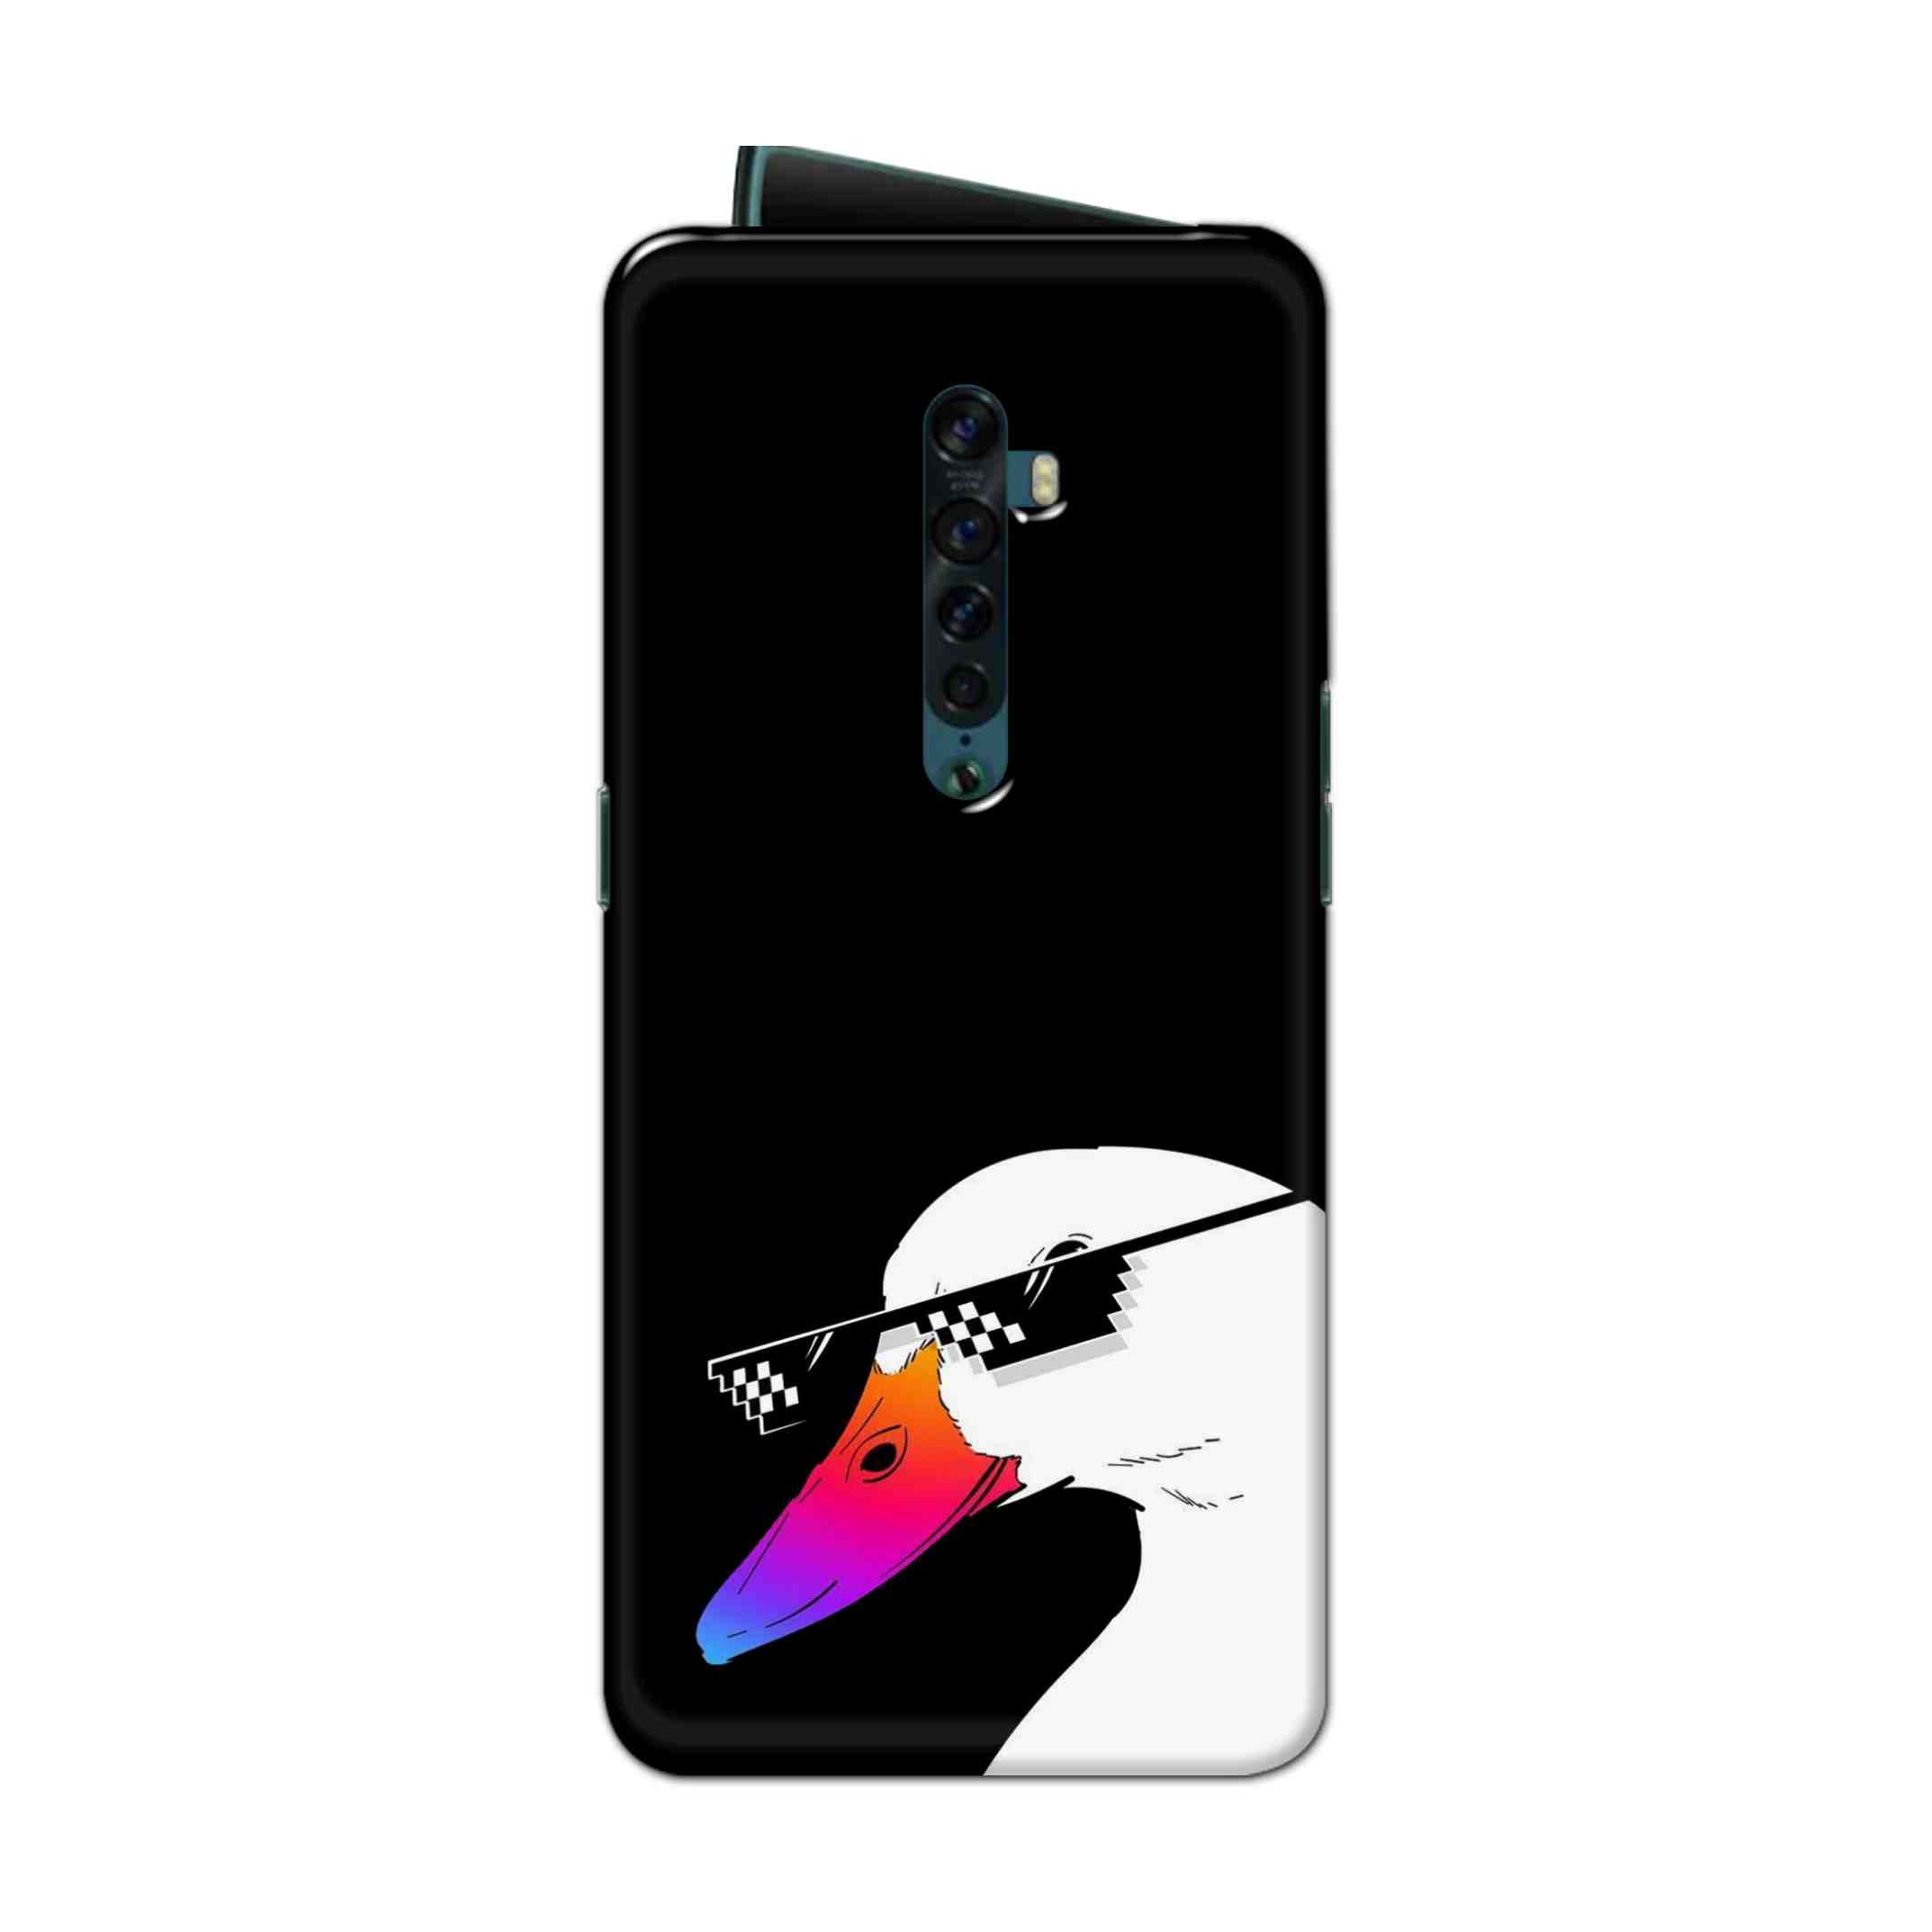 Buy Neon Duck Hard Back Mobile Phone Case Cover For Oppo Reno 2 Online